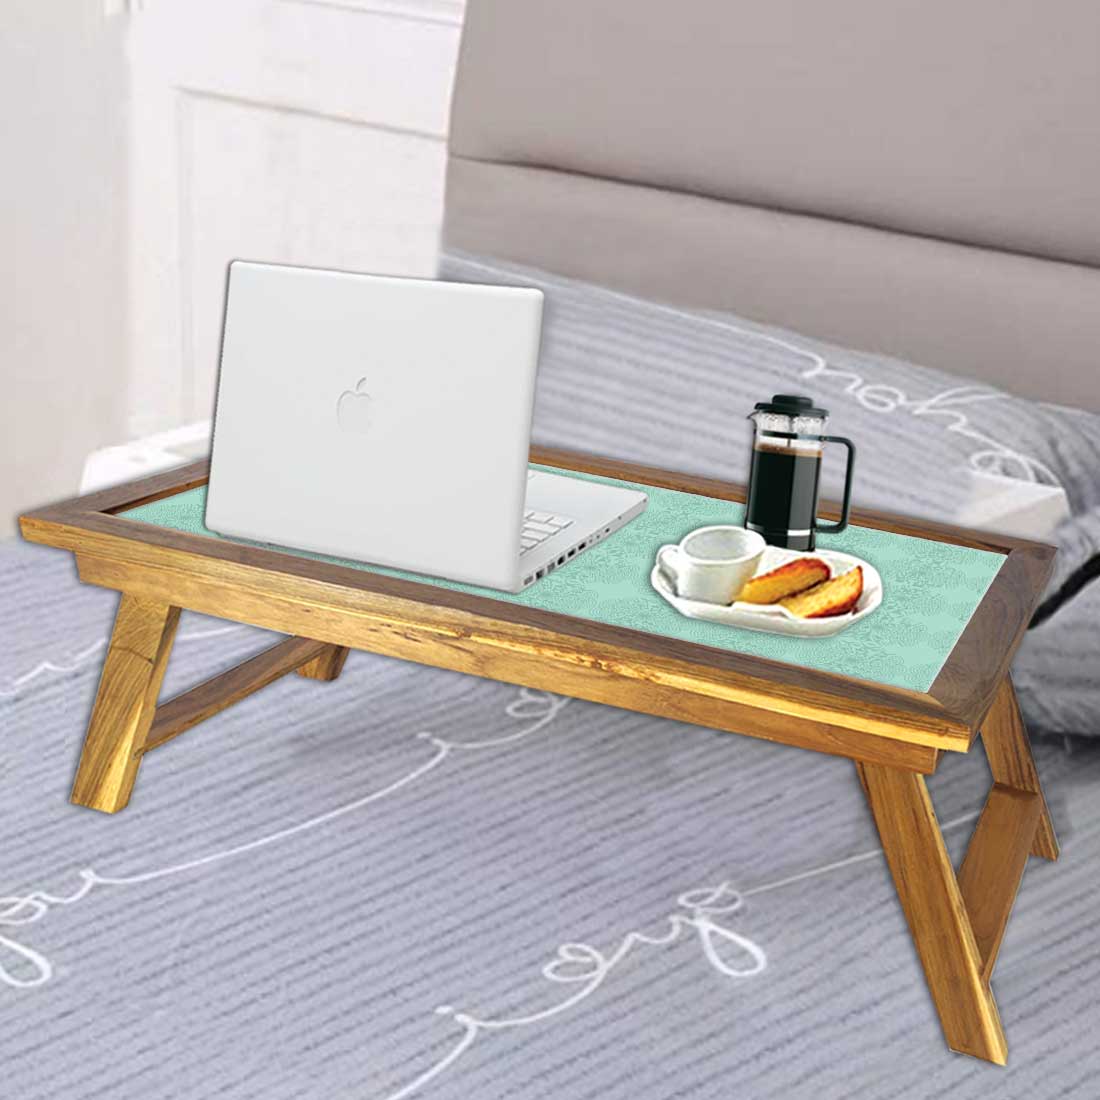 Nutcase Folding Laptop Table For Home Bed Lapdesk Breakfast Table Foldable Teak Wooden Study Desk - Green Flower Design Nutcase